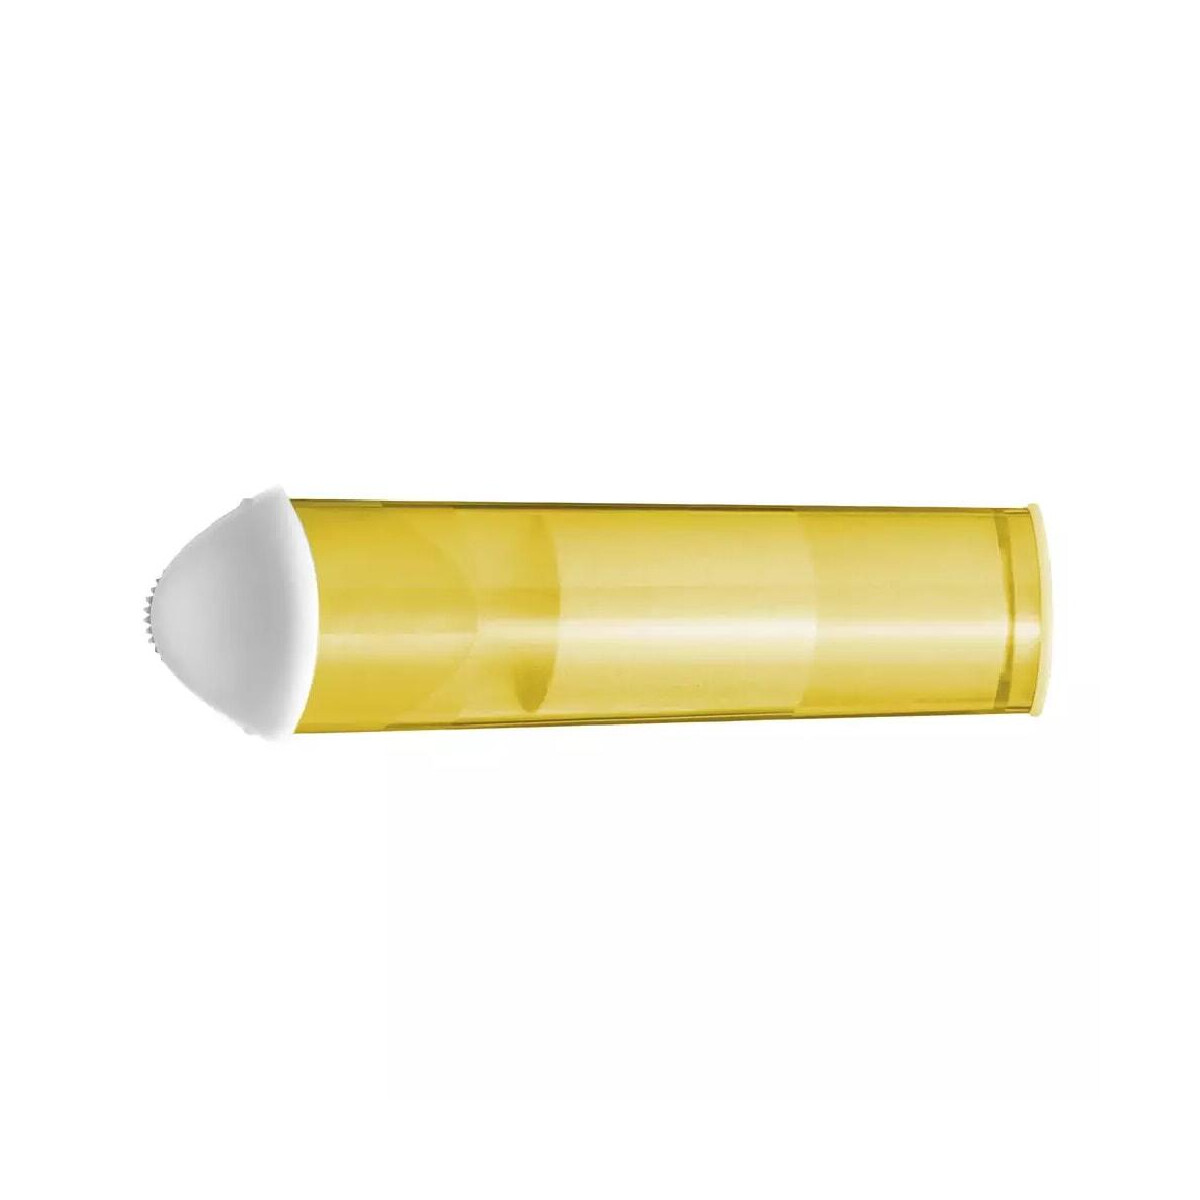 Prym Chalk cartridges, yellow